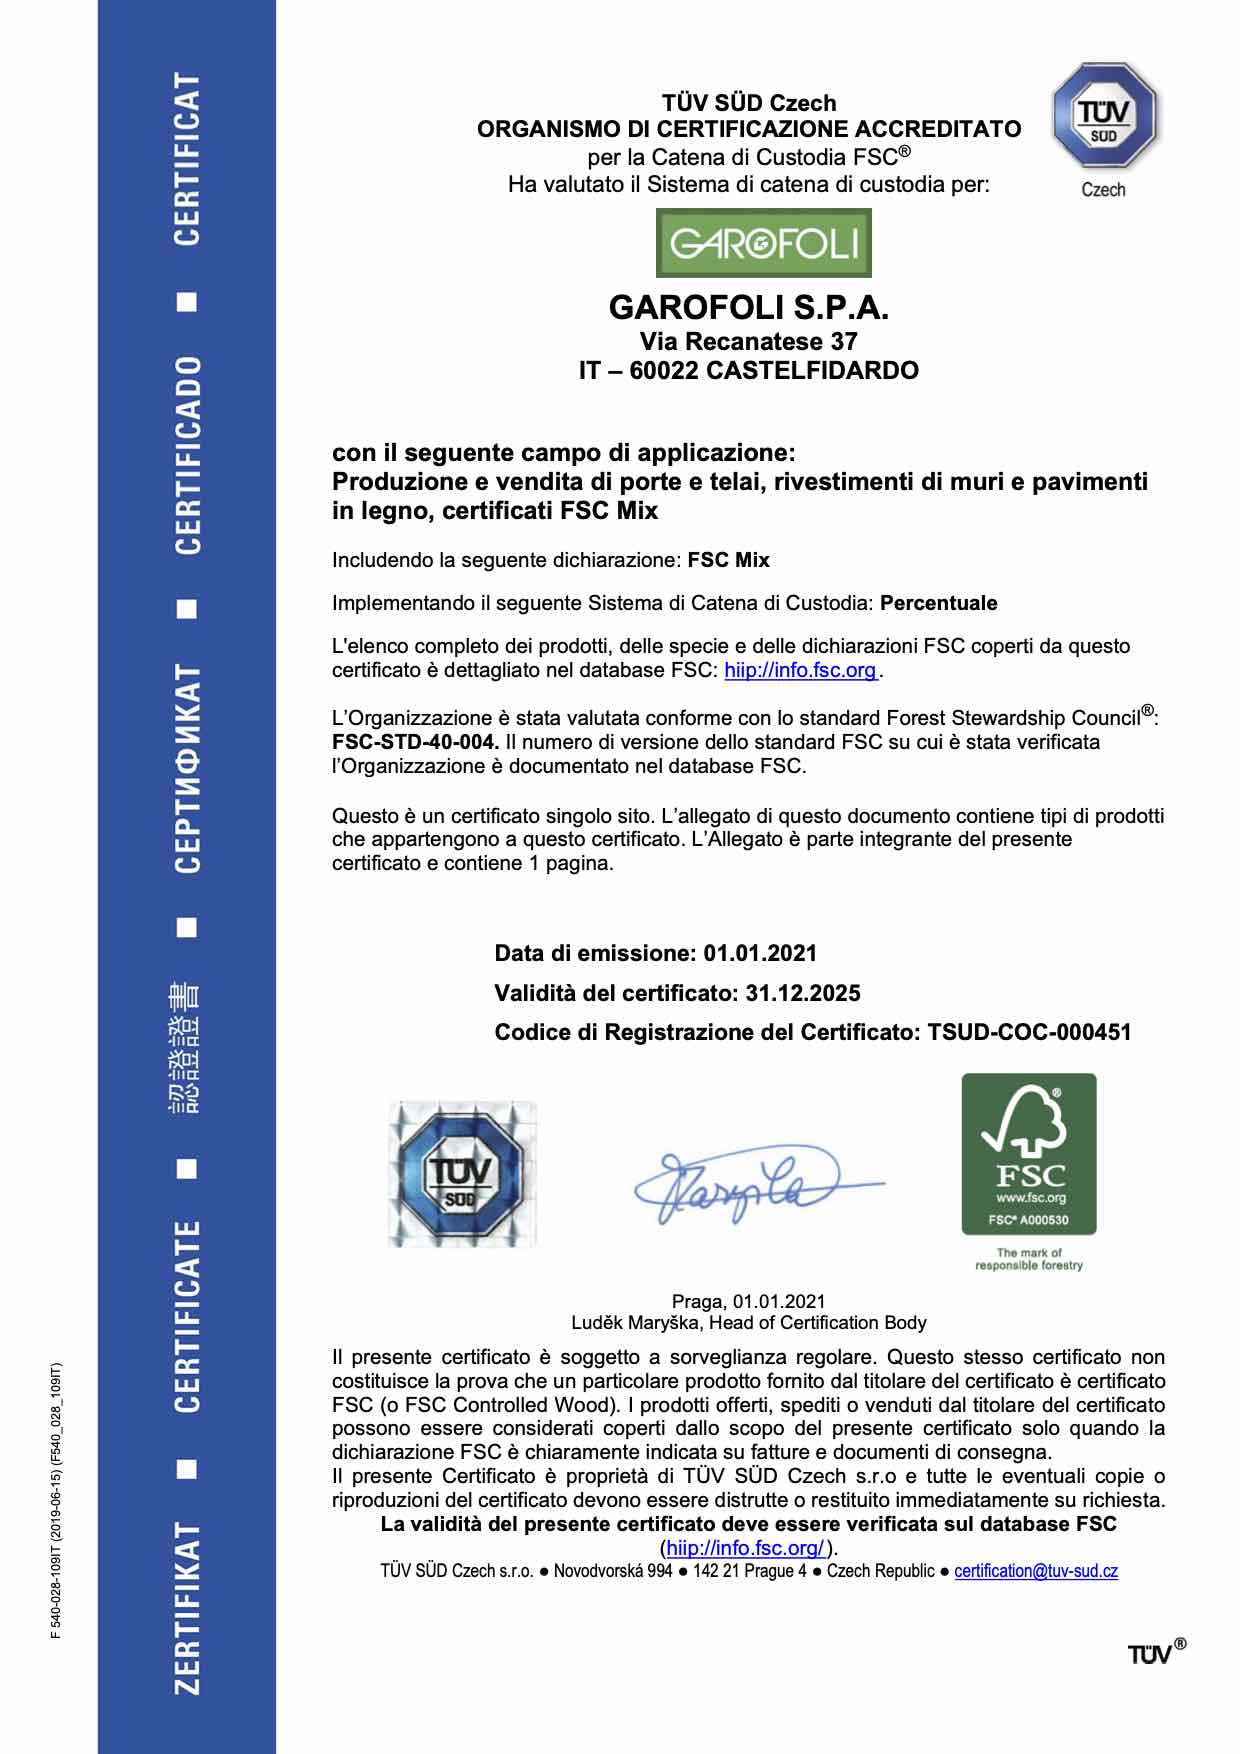 Garofoli certificato fsc - Garofoli